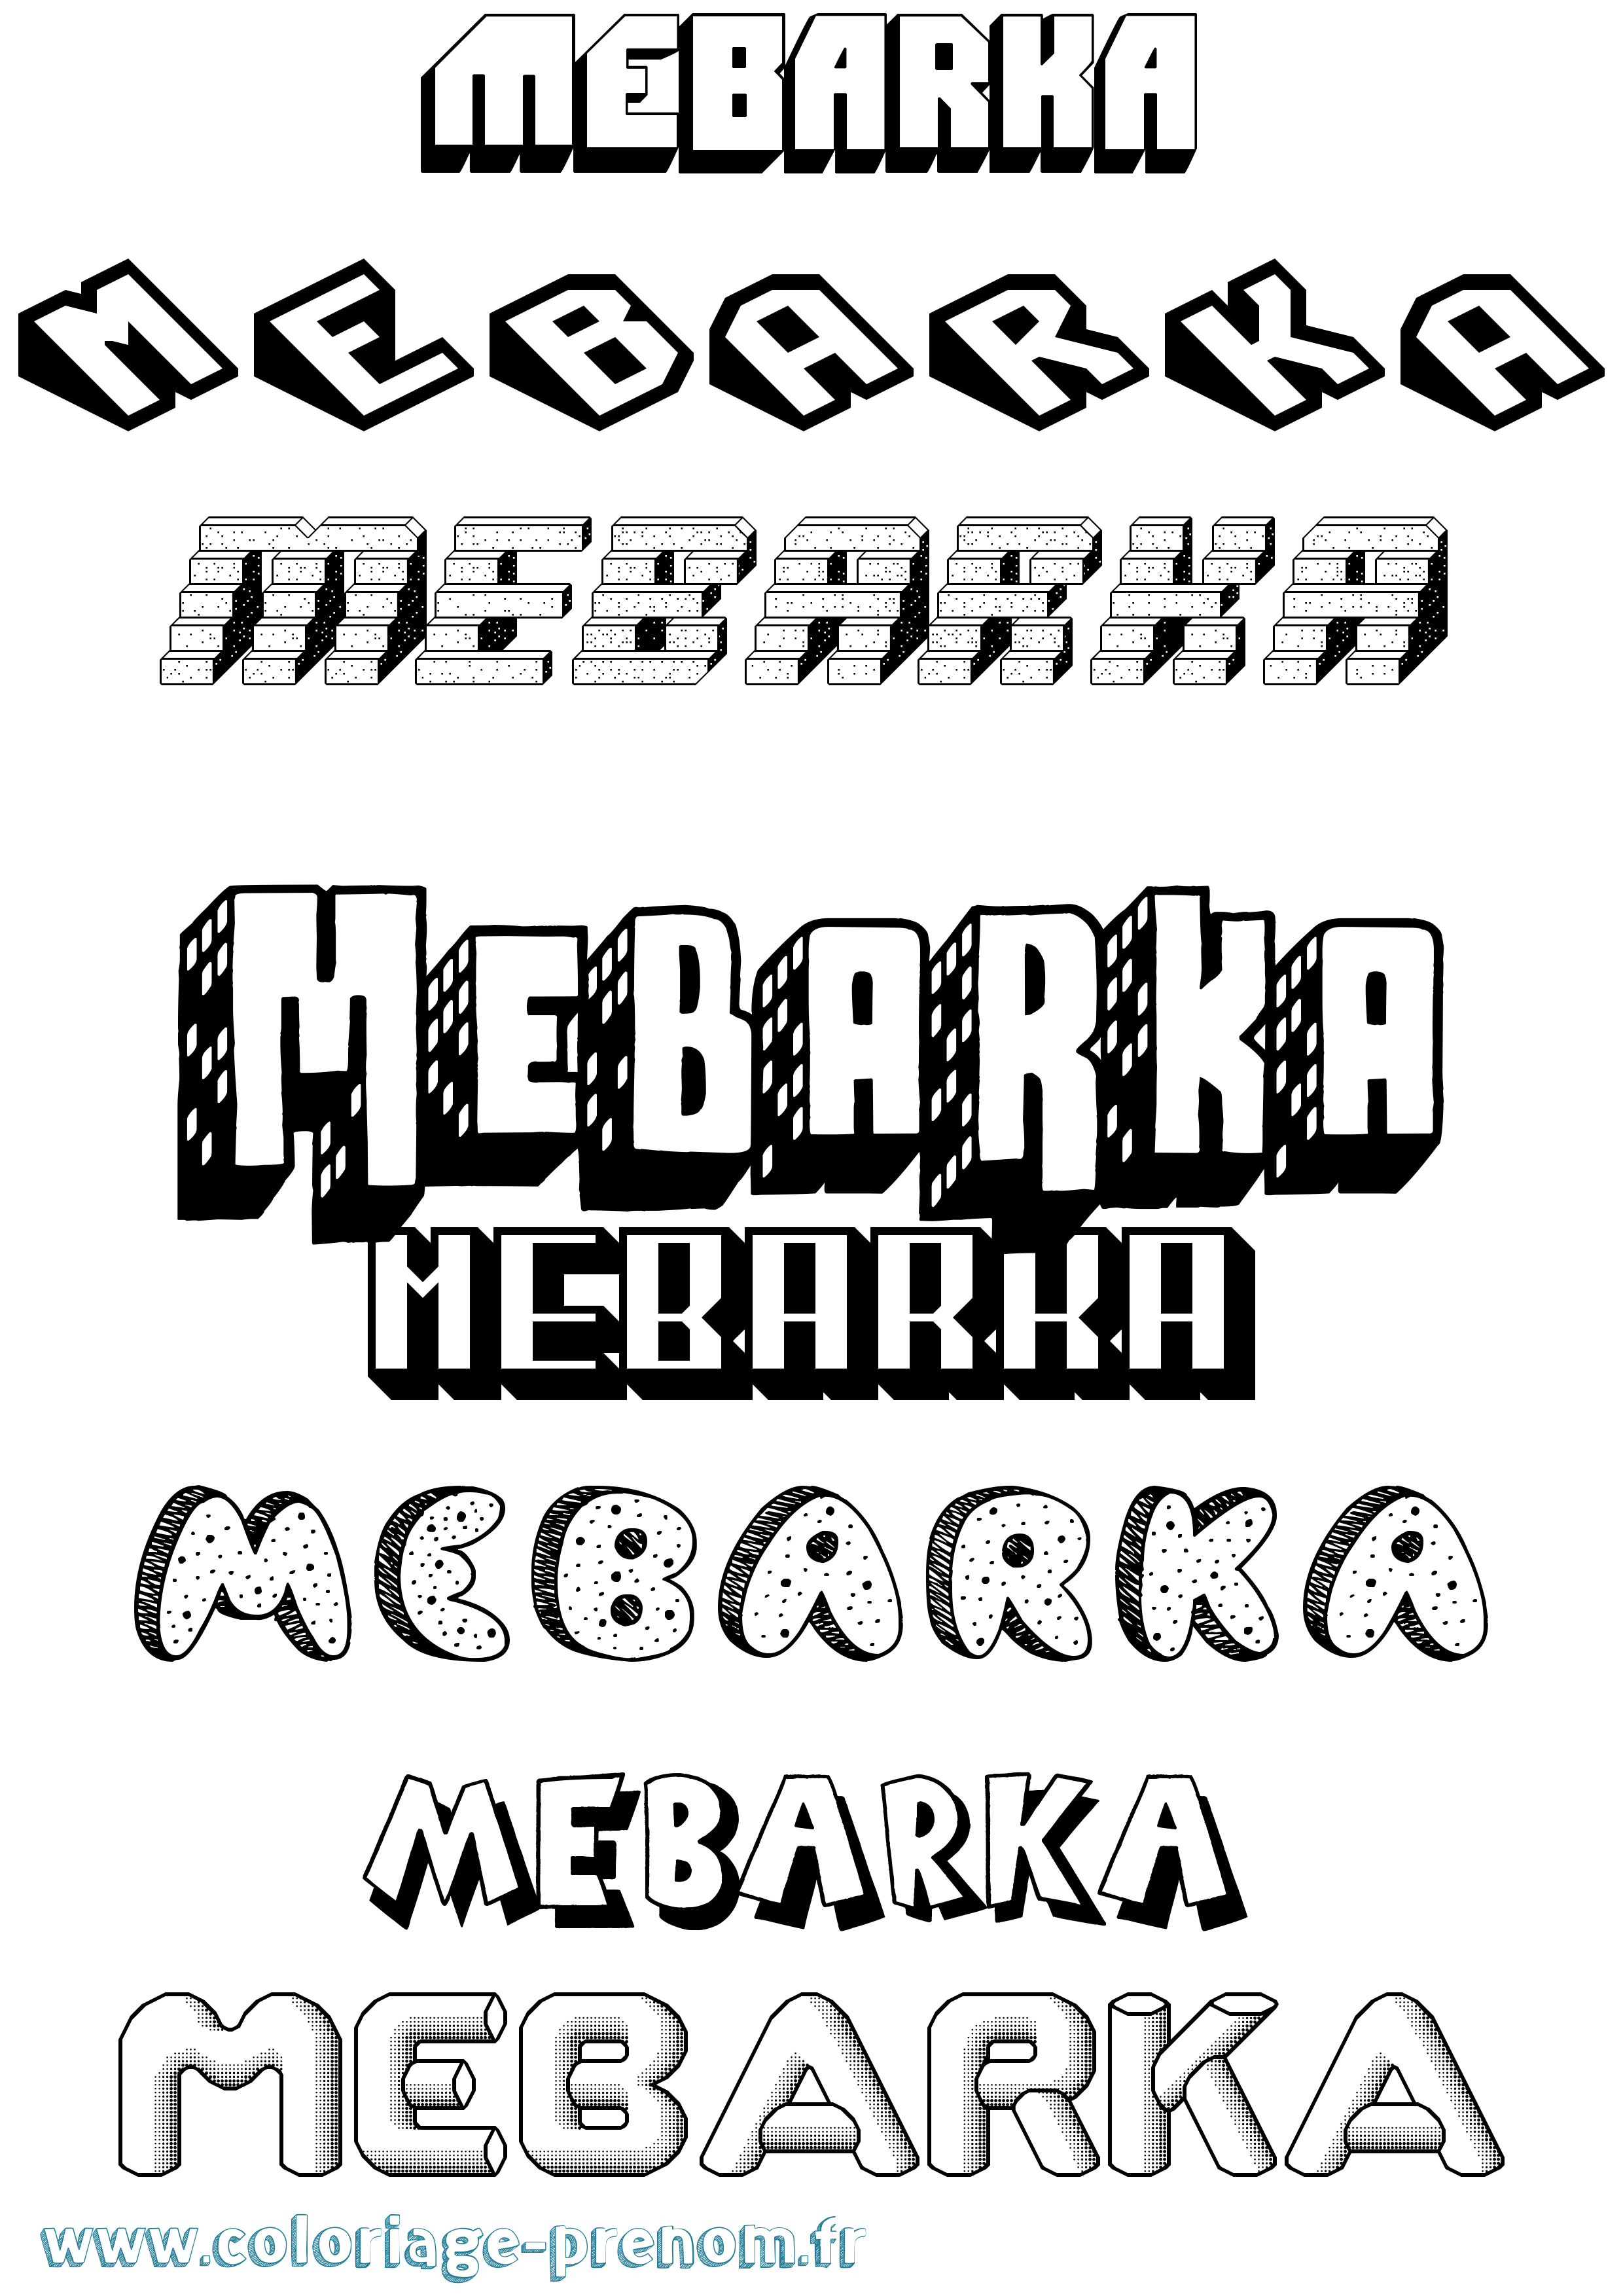 Coloriage prénom Mebarka Effet 3D